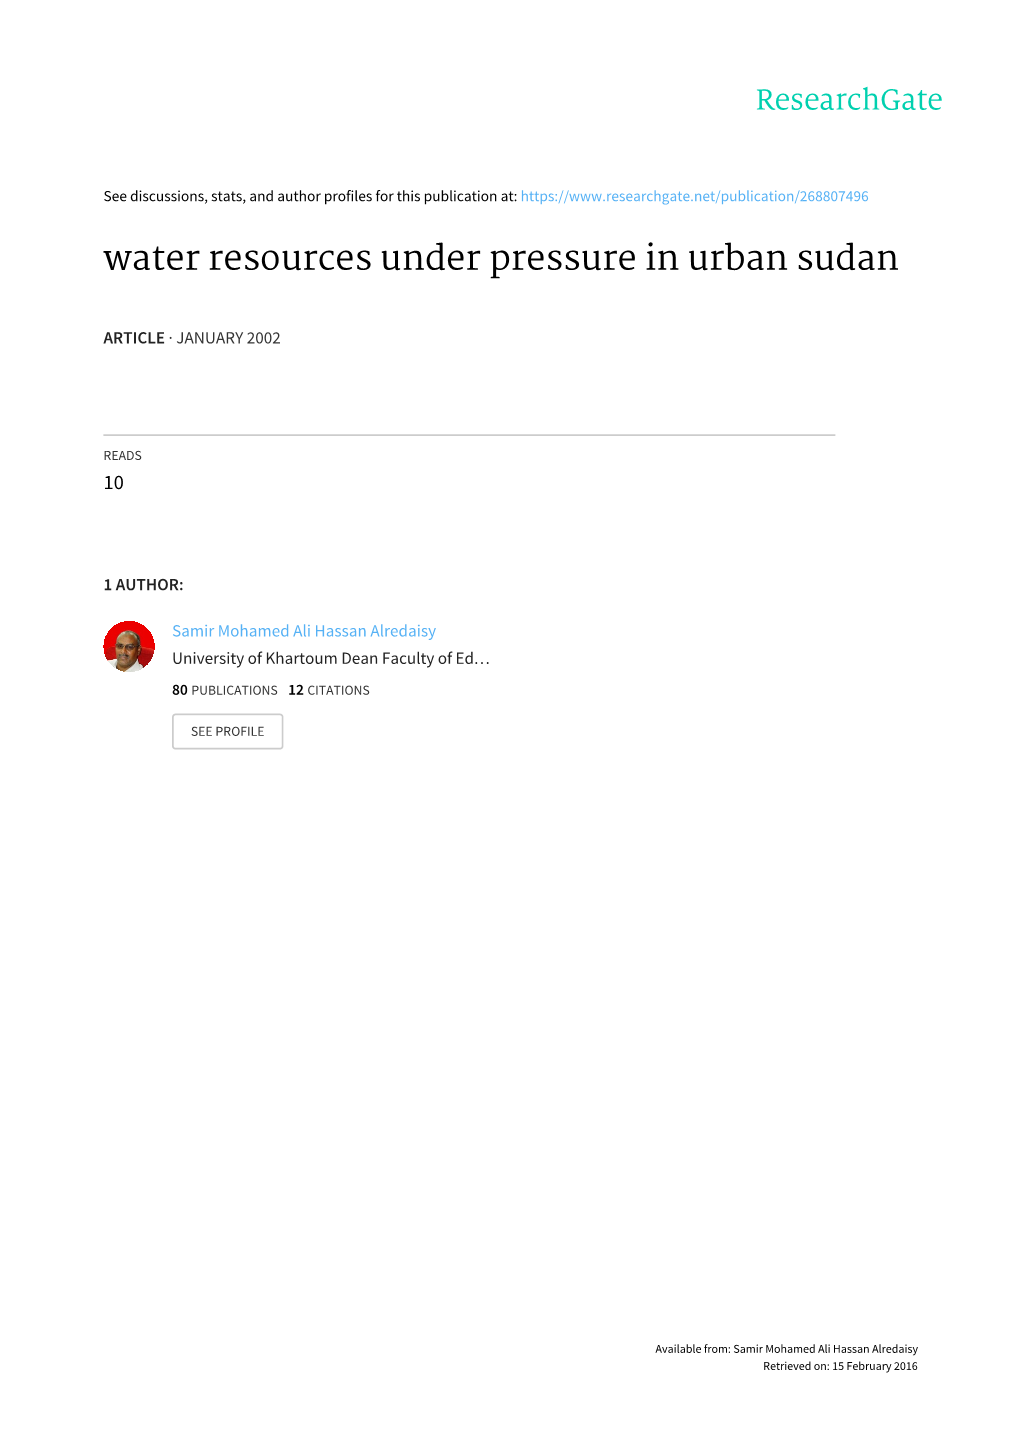 Water Resources Under Pressure in Urban Sudan